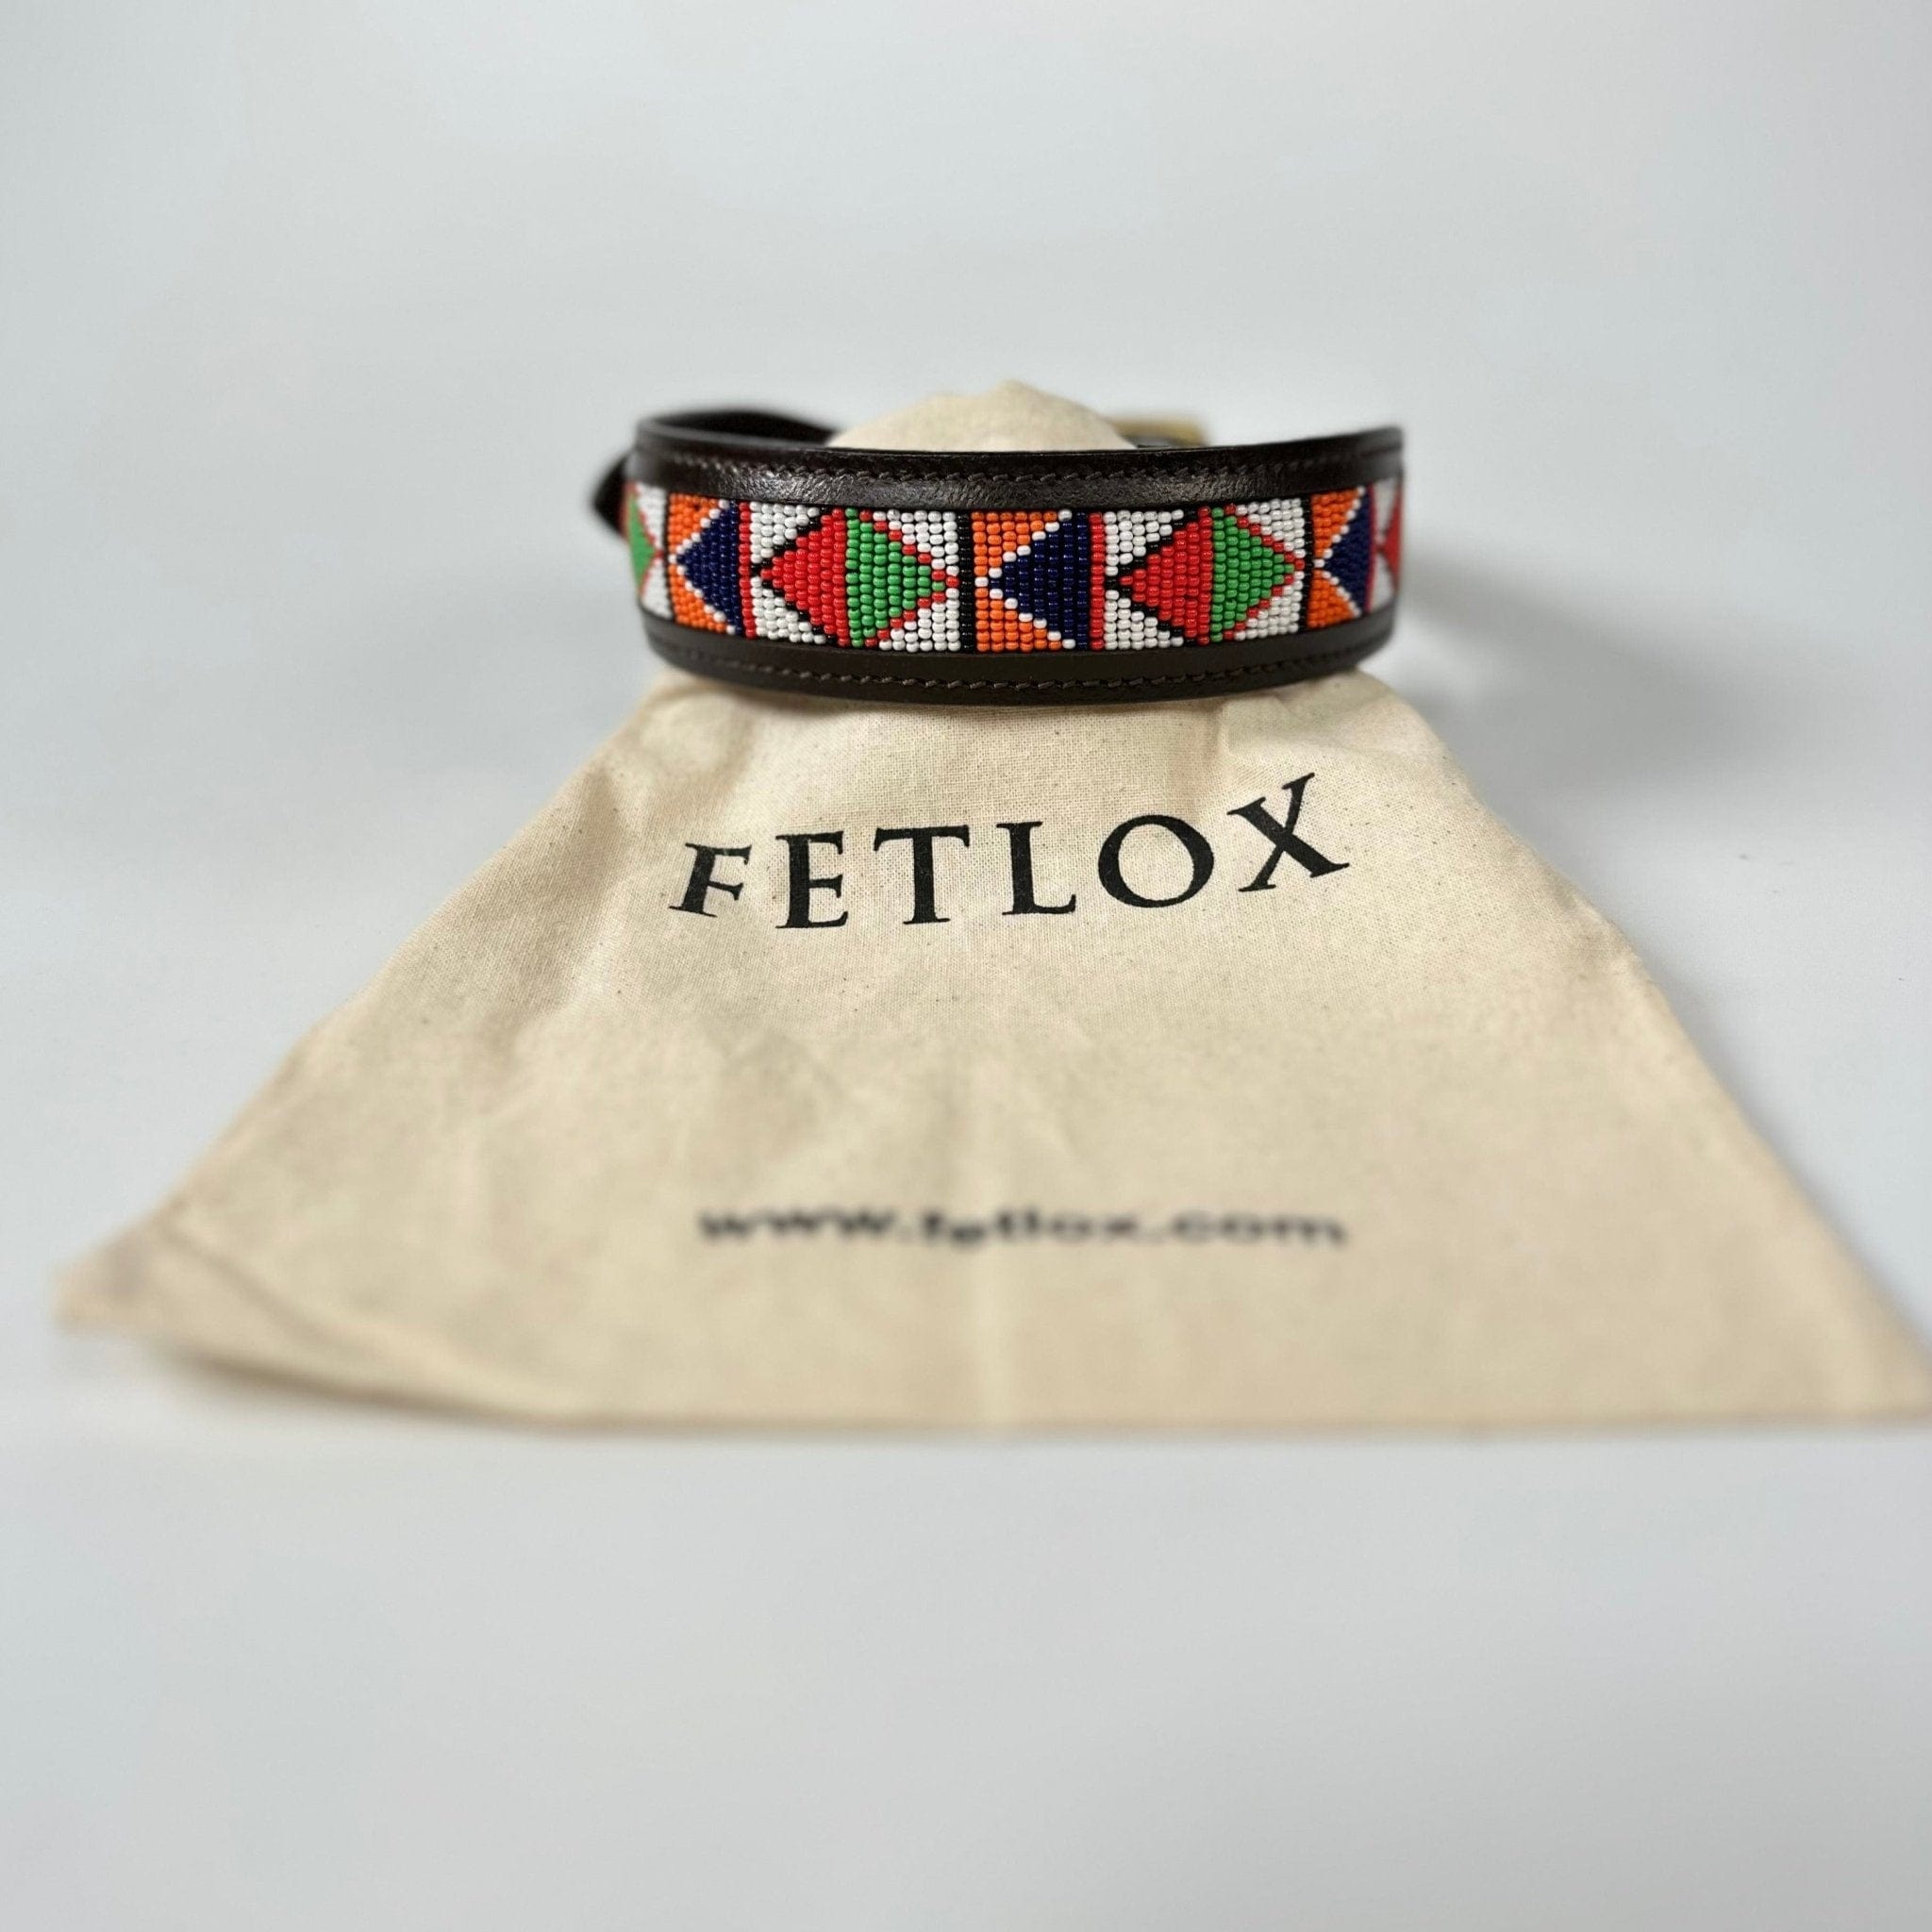 Beaded Dog Collar - fetlox